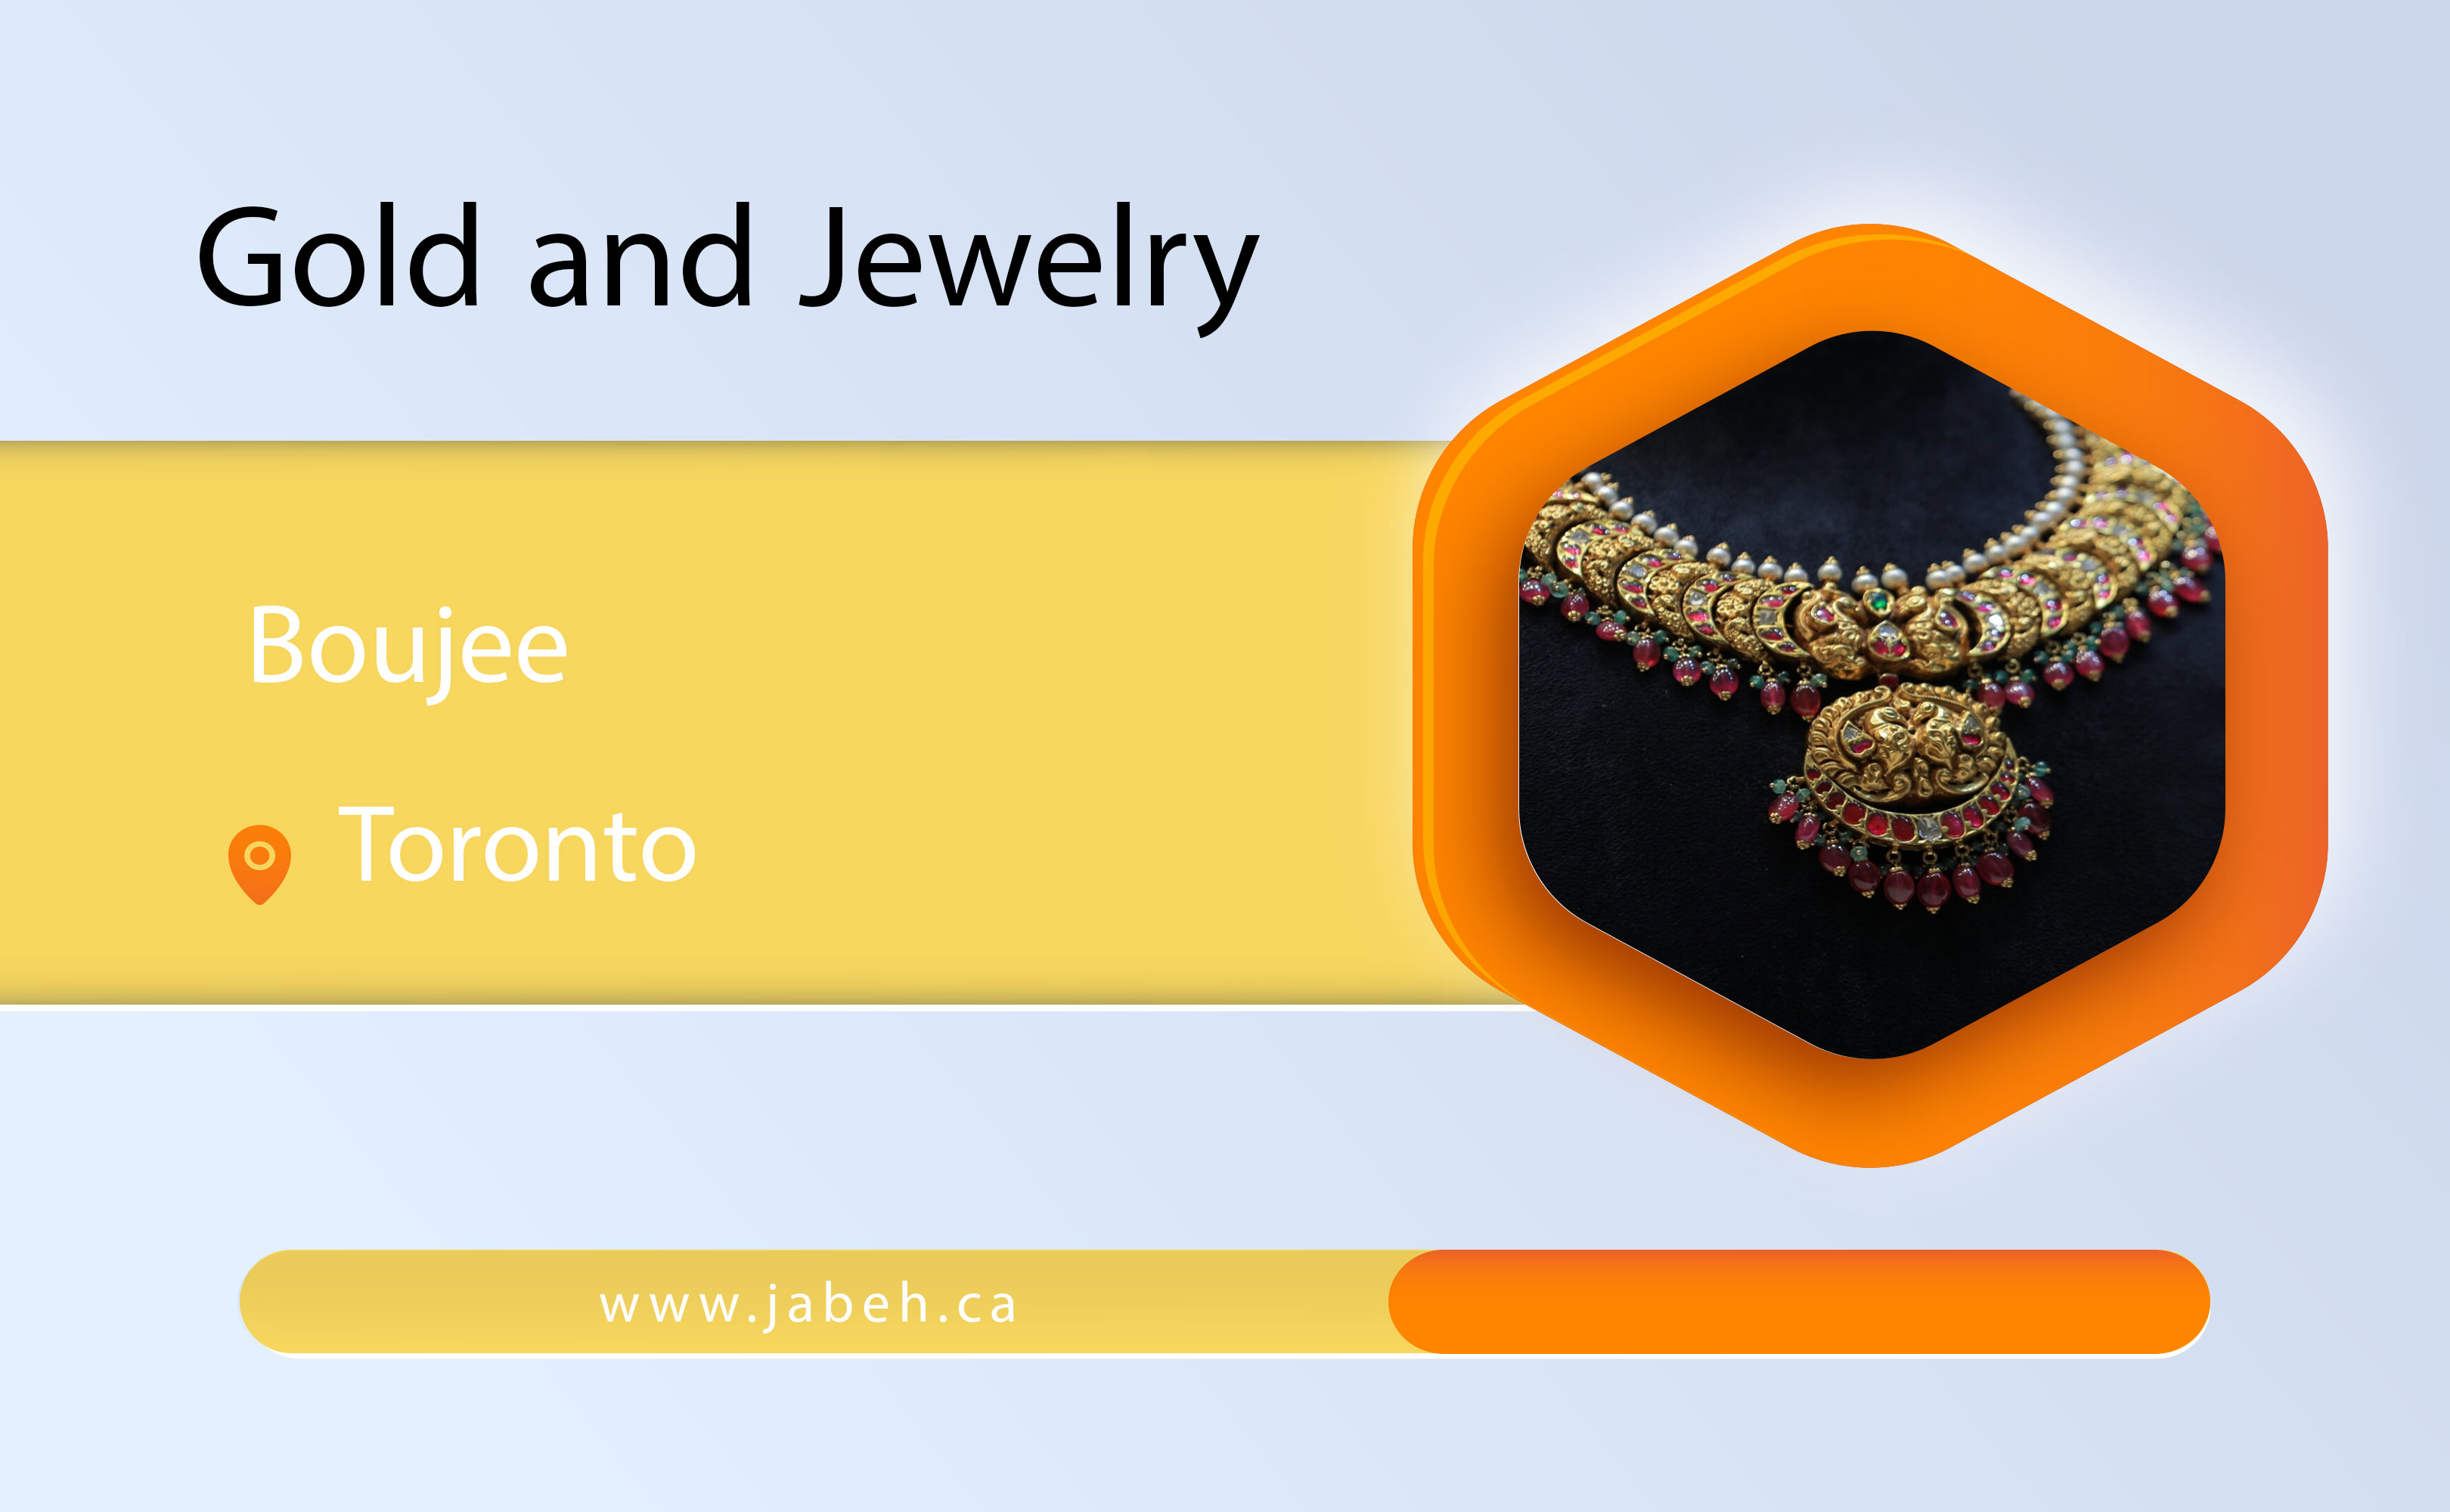 Boujee Persian Gold and Jewelry in Toronto